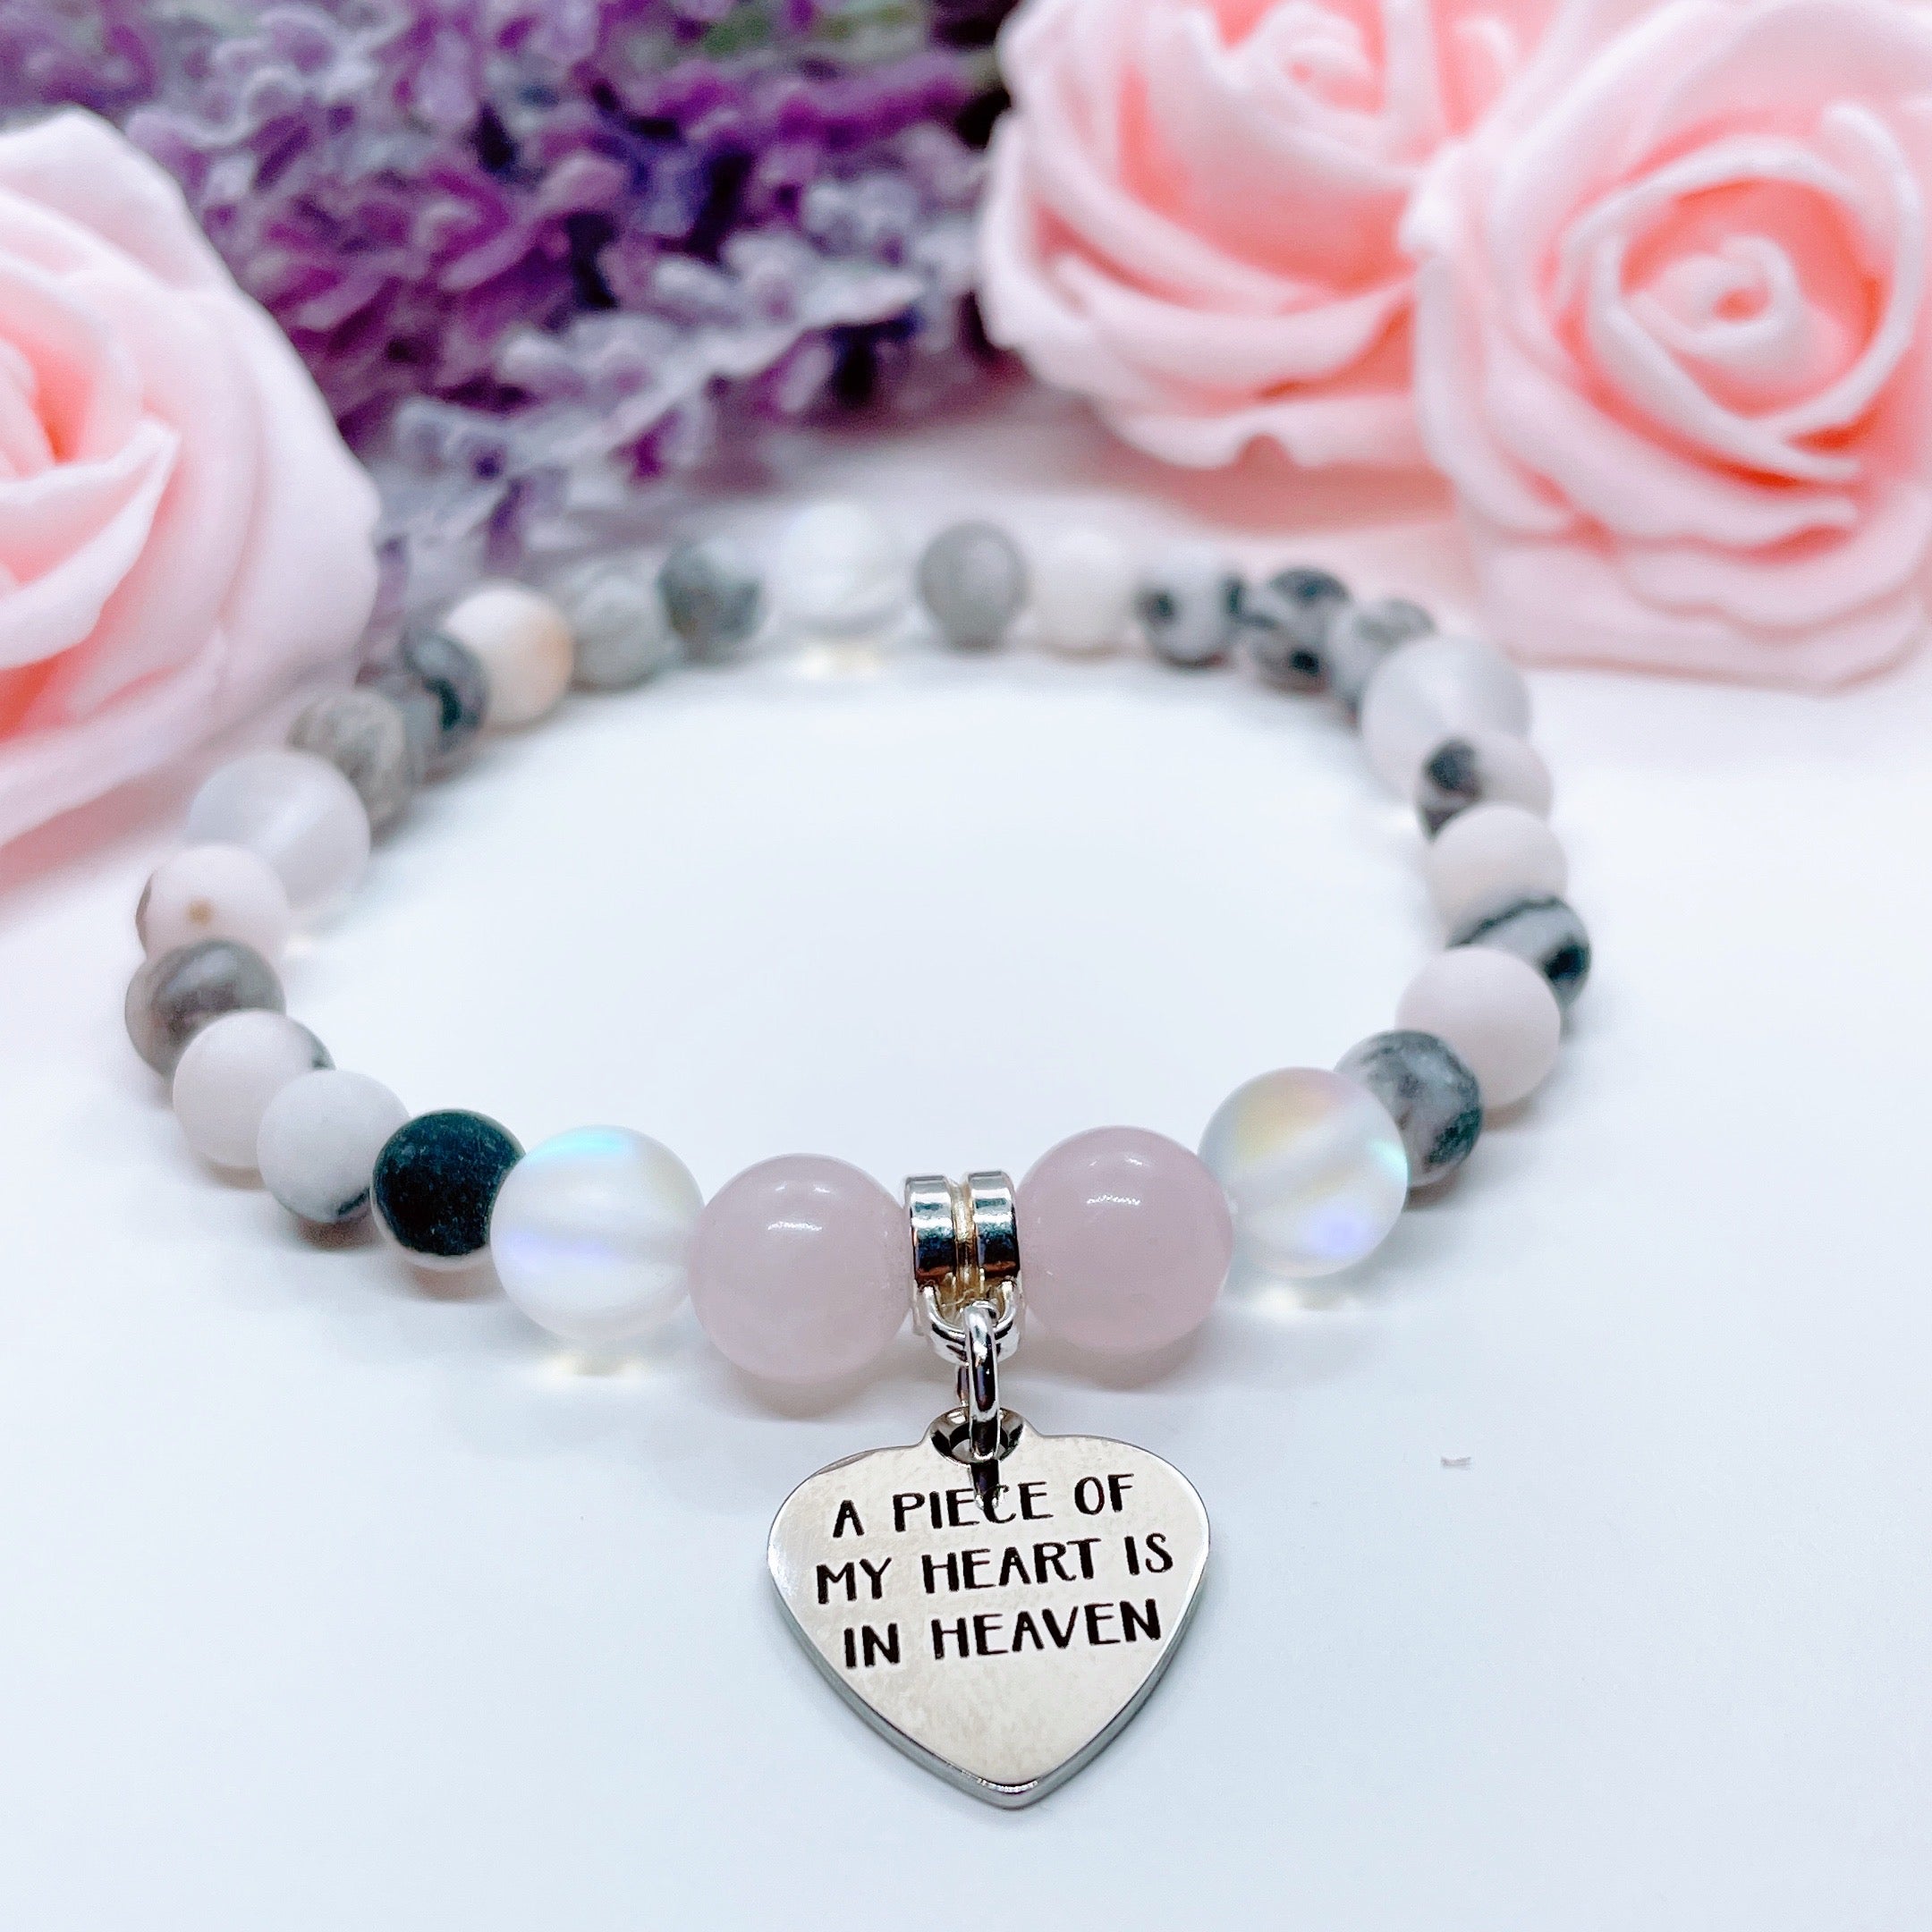 A Piece of my Heart is in Heaven Companion Charm Bracelet Rose Quartz